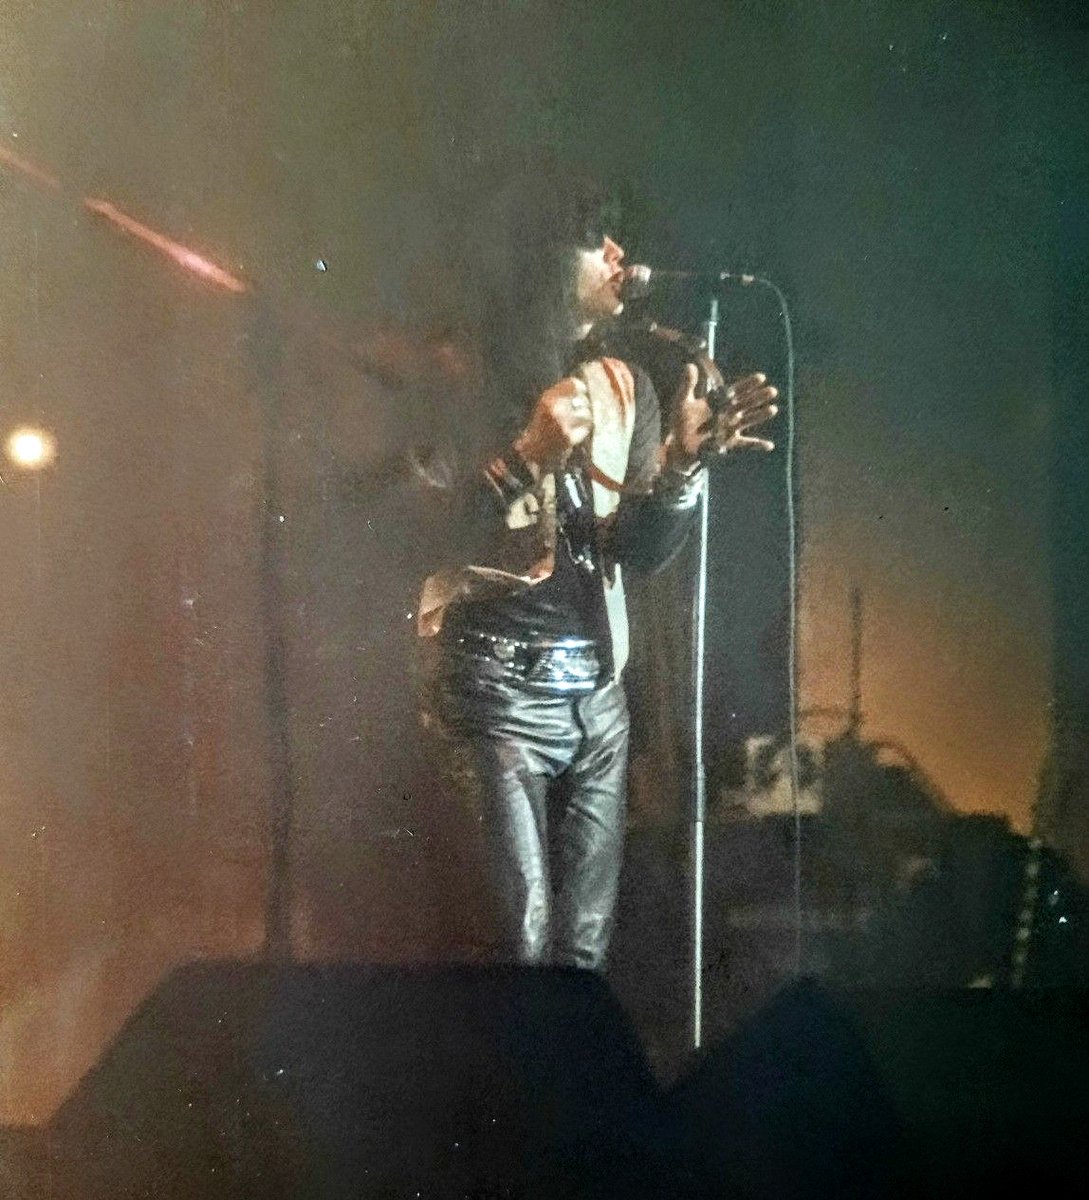 + 𝕀𝔸 // 𝕋ℍ𝔼 ℂ𝕌𝕃𝕋 +
Live Brixton Academy, London, 28/06/1986
📸 Tinike Van Mildert.
⚡ CFFC ⚡
*
*
*
{ #ianastbury #thecult #live #london #brixtonacademy #love #tour  #shaman #rocknrollmessiahs #nationcult #cultzone #cffc #CLTRCHV @ASTBURY @officialcult }